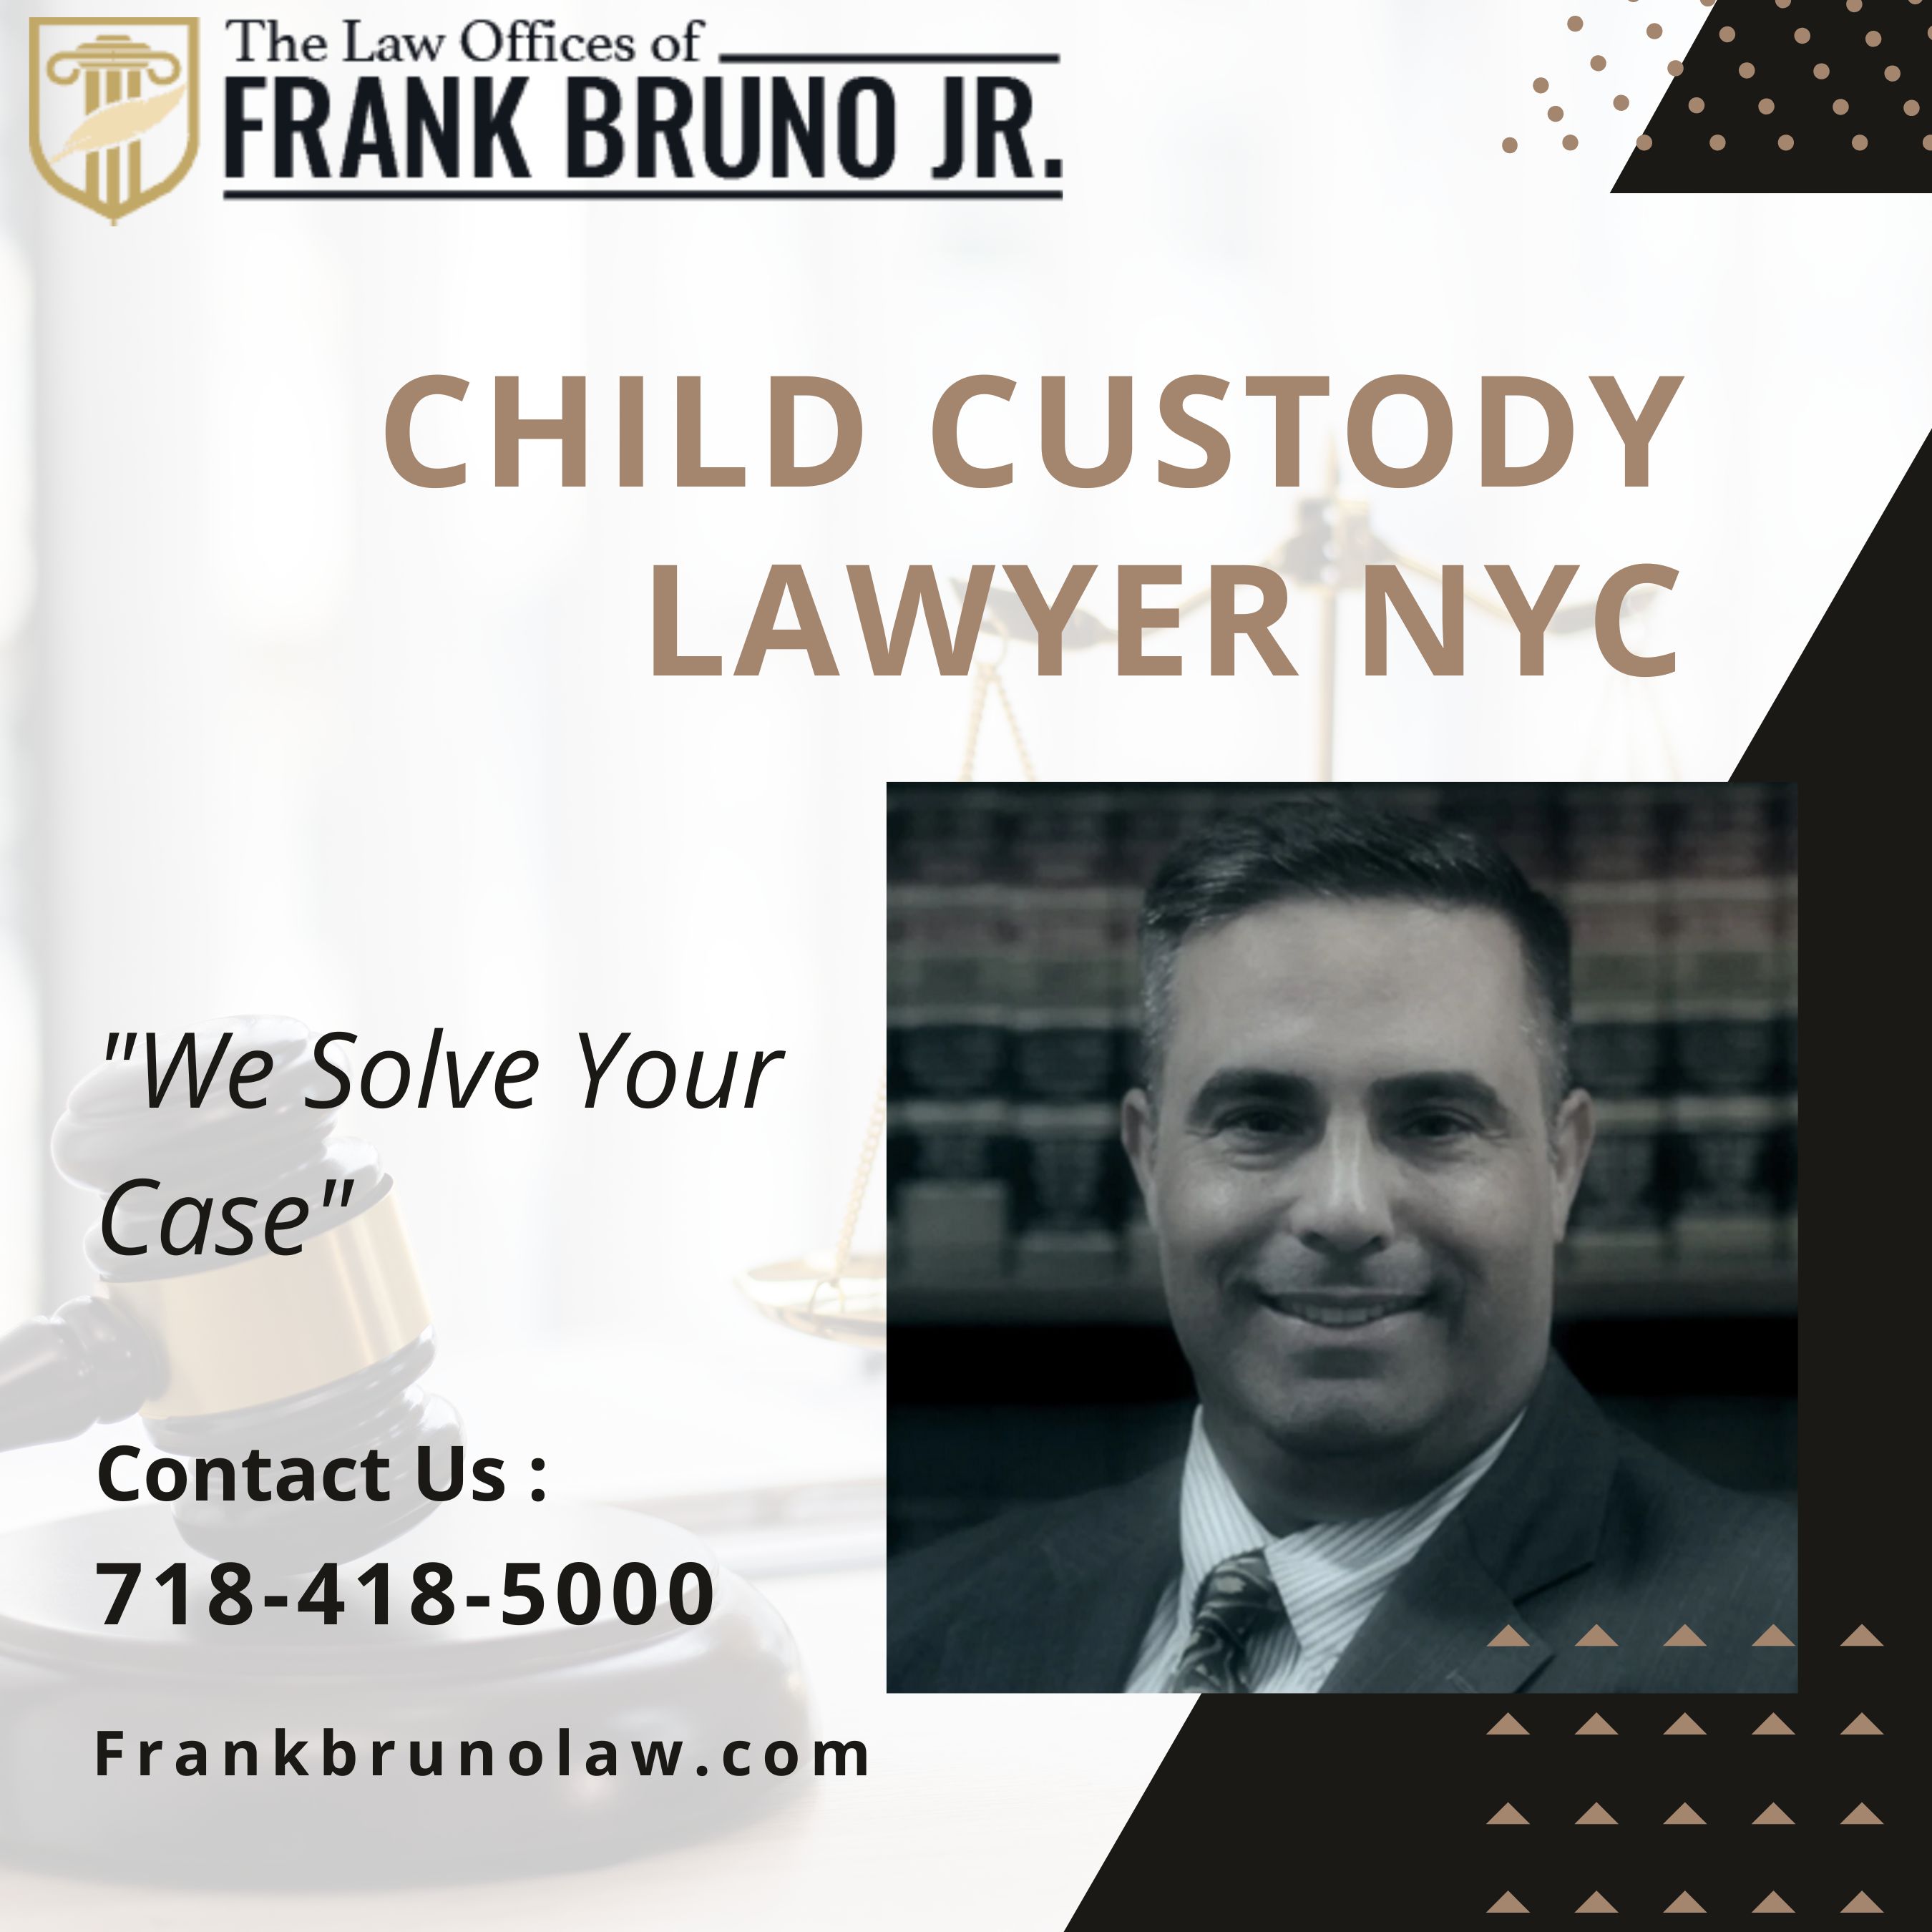 Child Custody Lawyer Nyc - New York - New York ID1556998 4